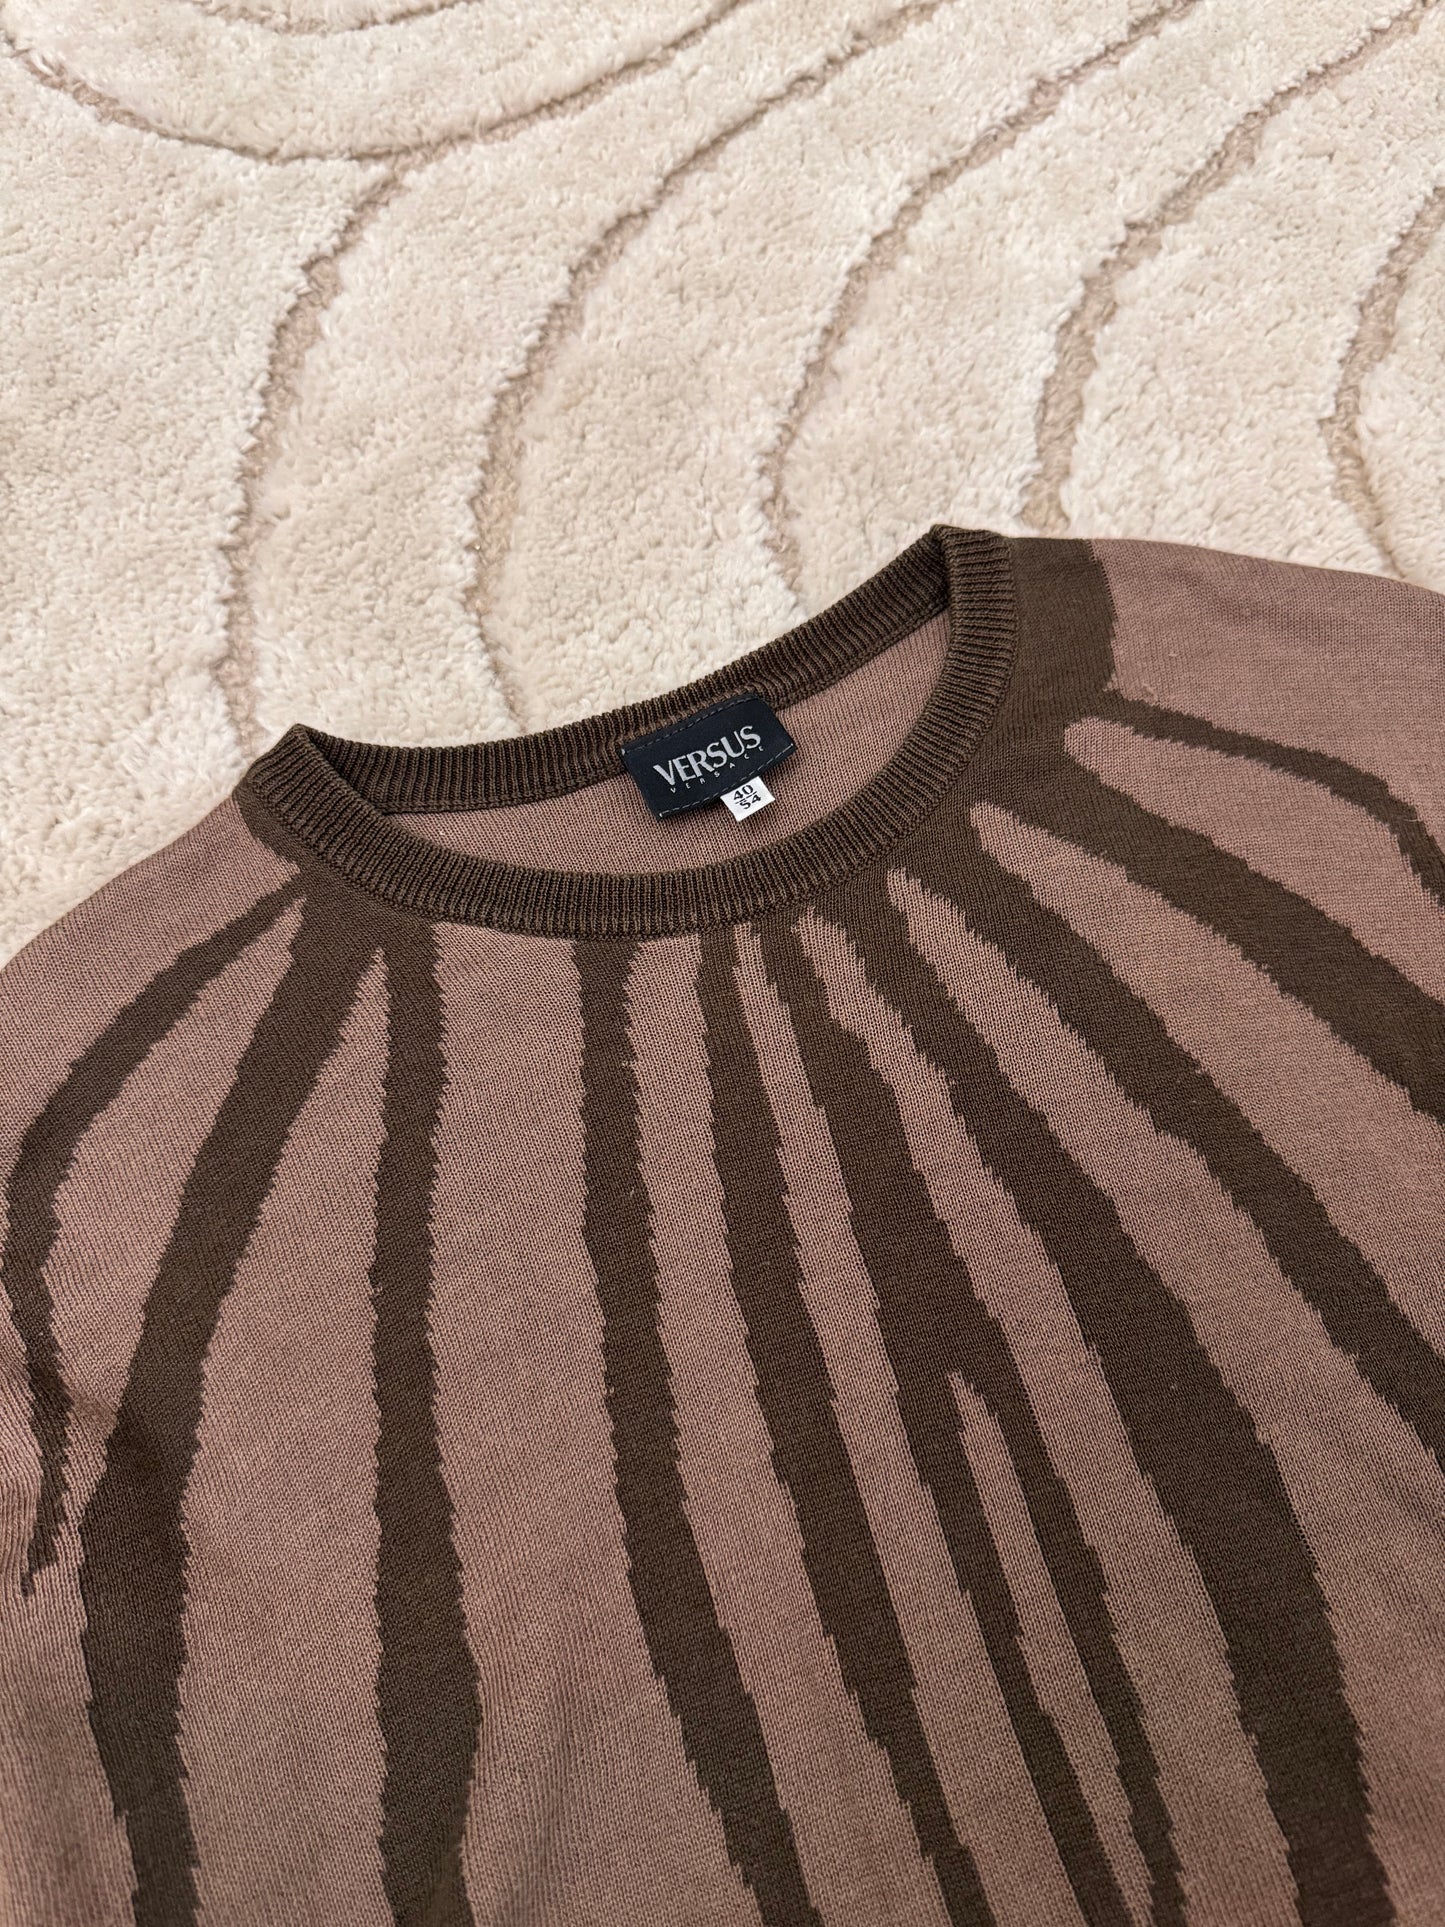 2000s Versace Primal Scars Sweater (M/L)